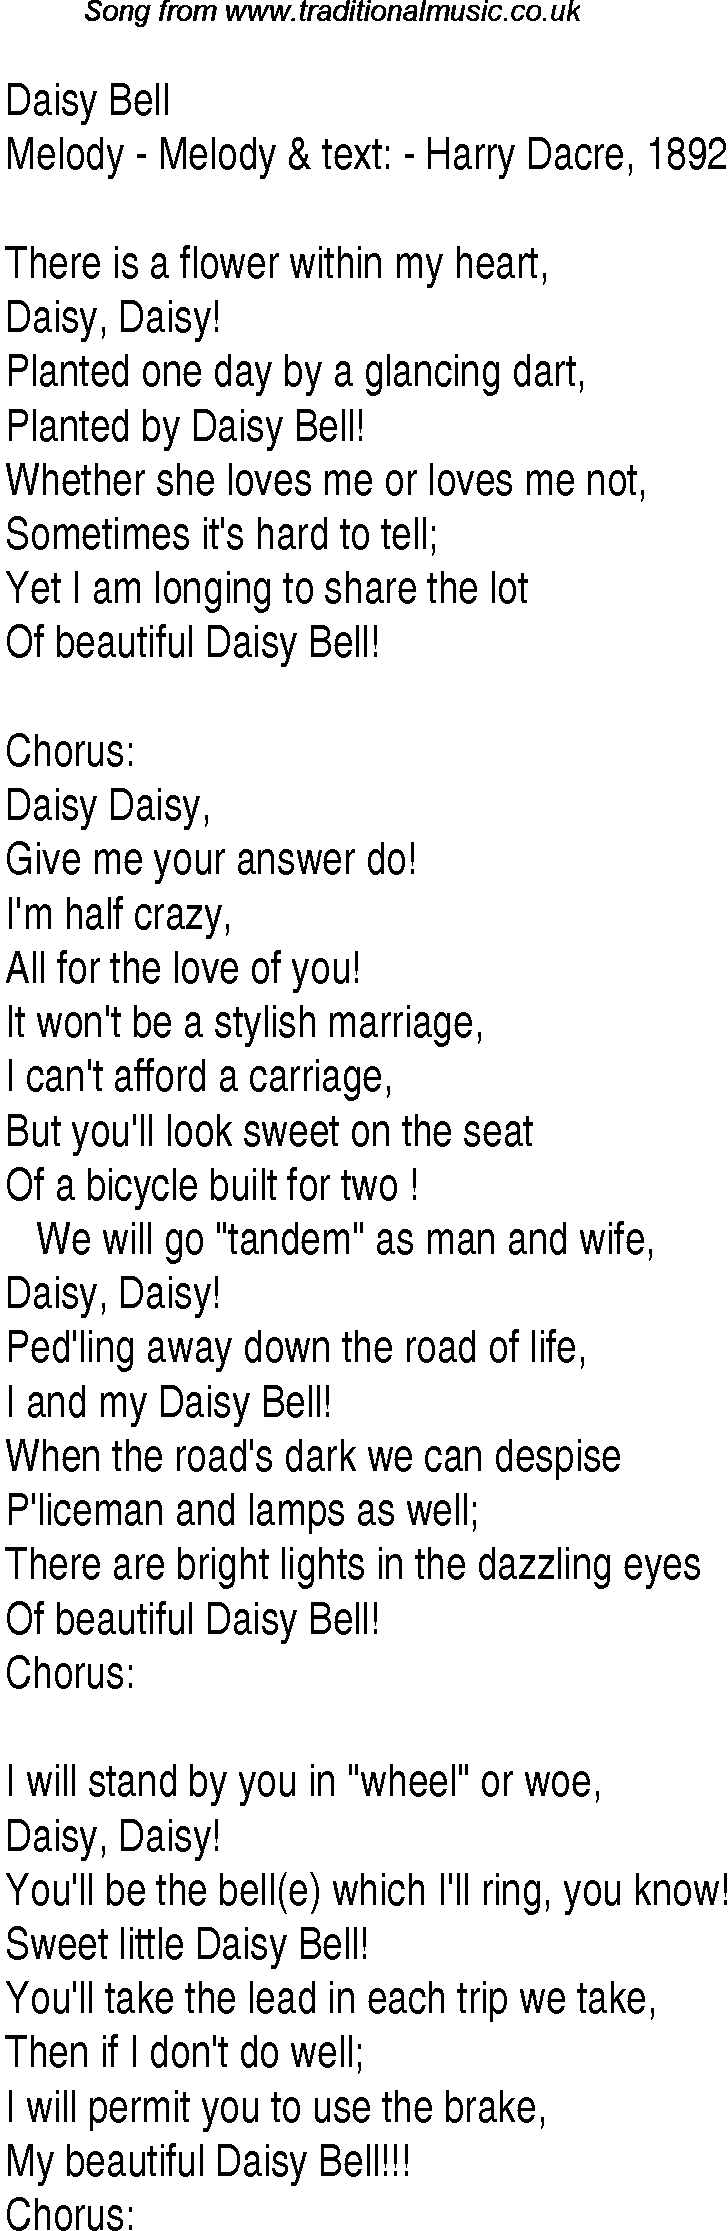 1940s top songs - lyrics for Daisy Bell